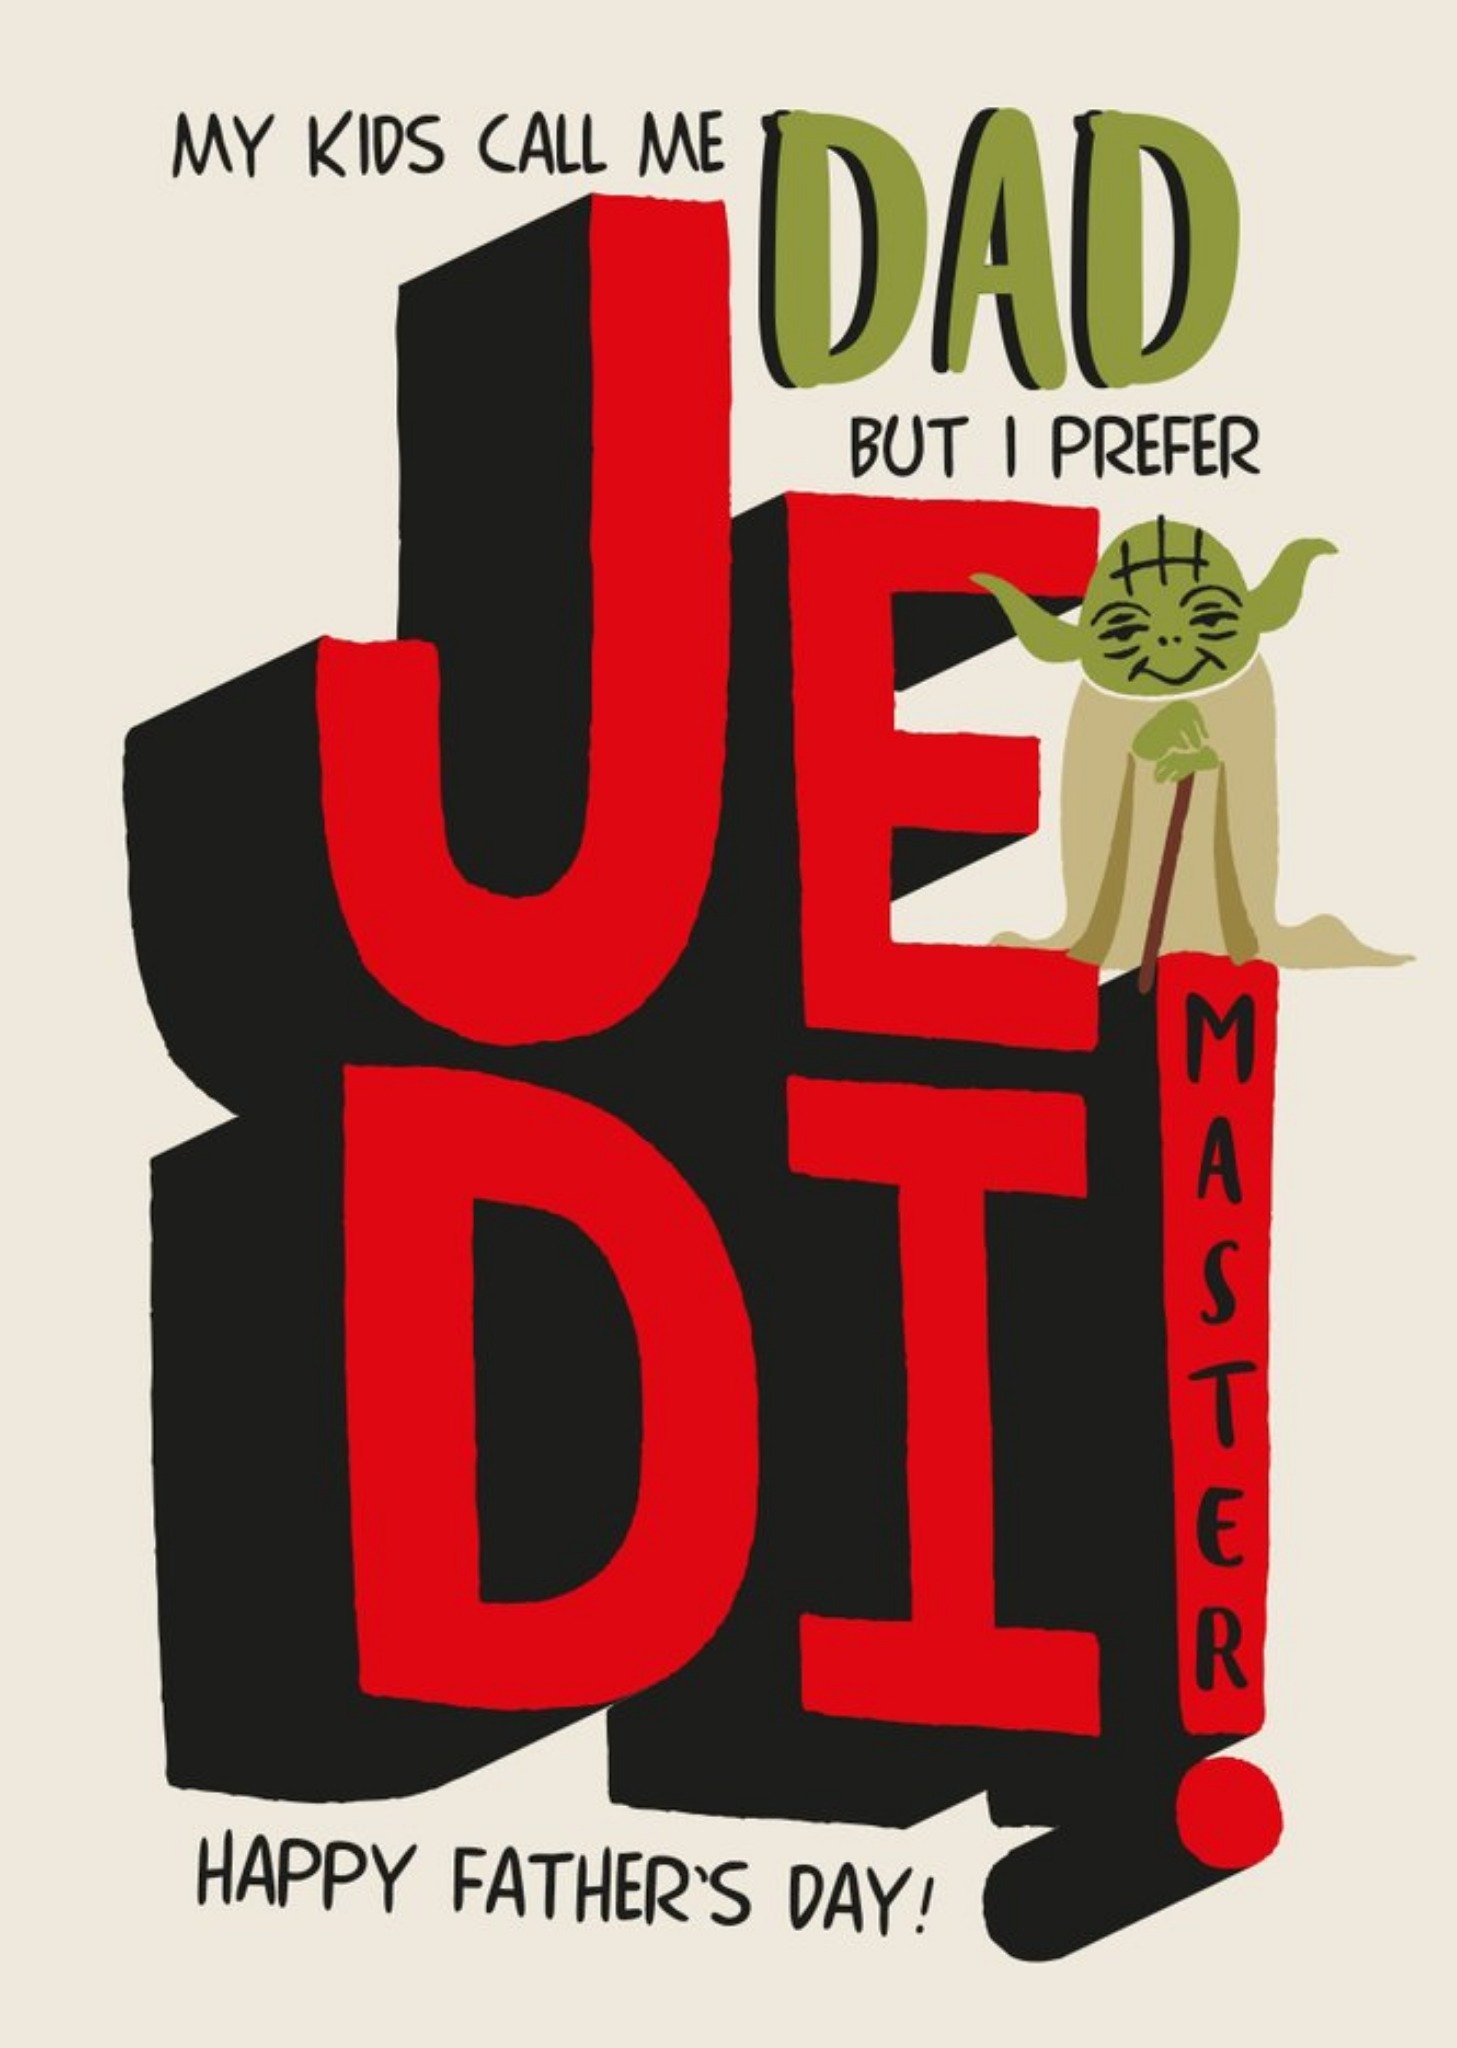 Disney Star Wars Funny Yoda Jedi Master Dad Father's Day Card Ecard